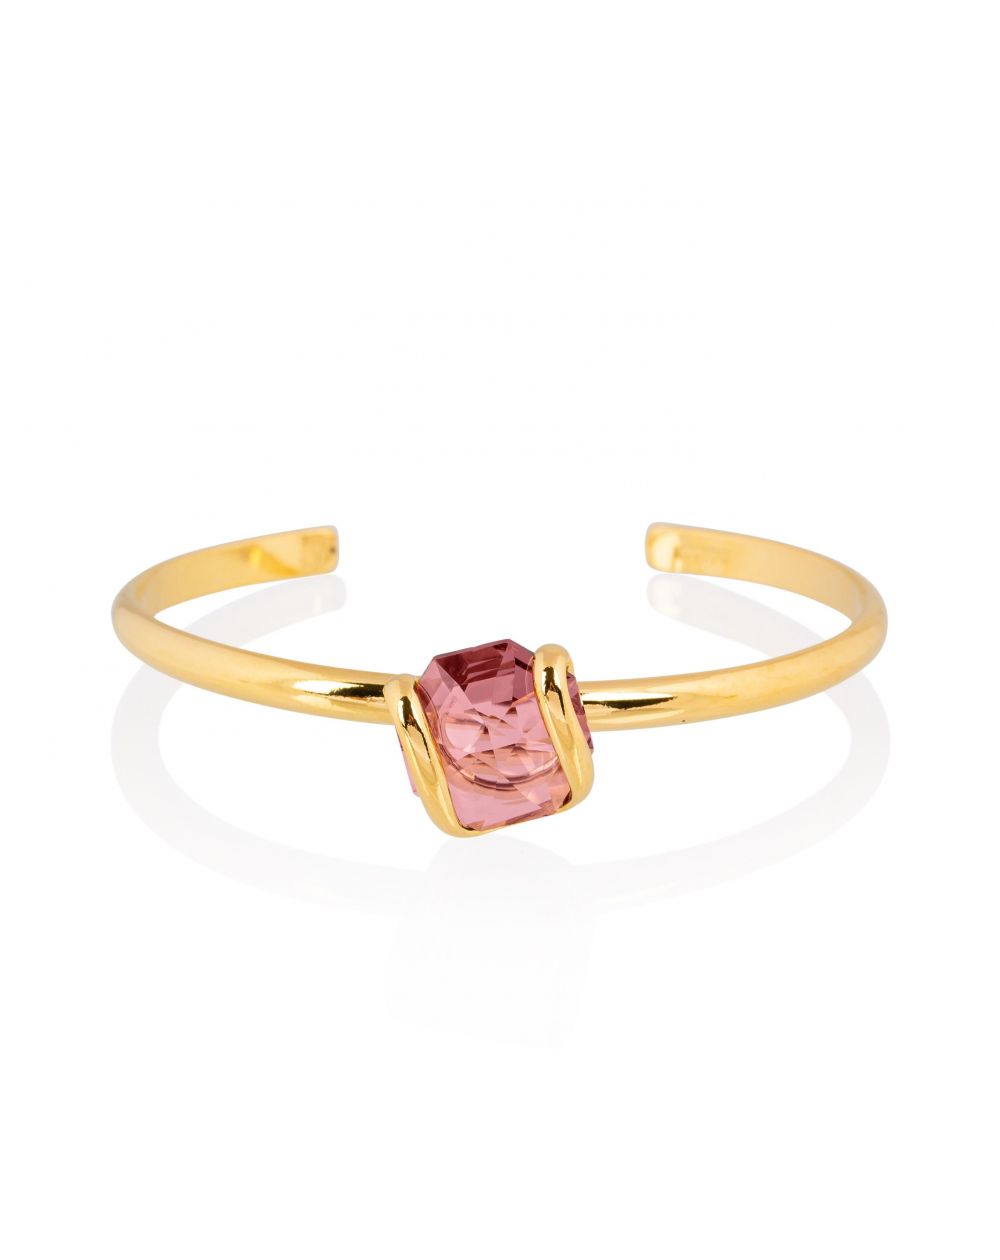 Andrea Marazzini bijoux - Bracelet cristal Swarovski Octagon Antique Pink